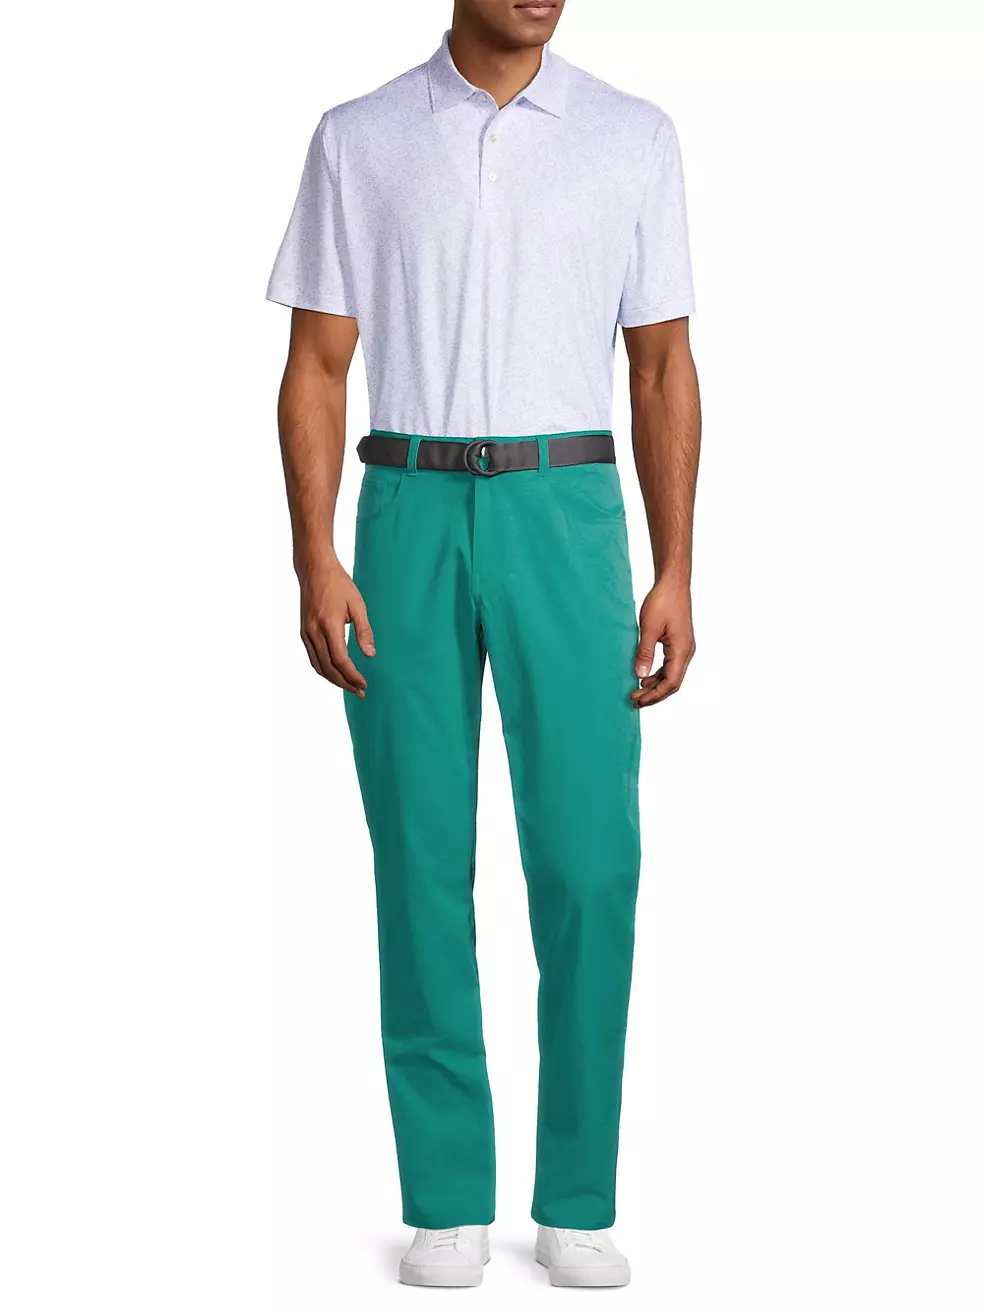 Peter Millar Crown Sport Jackson Performance 5 Pocket Golf Pant Men's 36x32  New